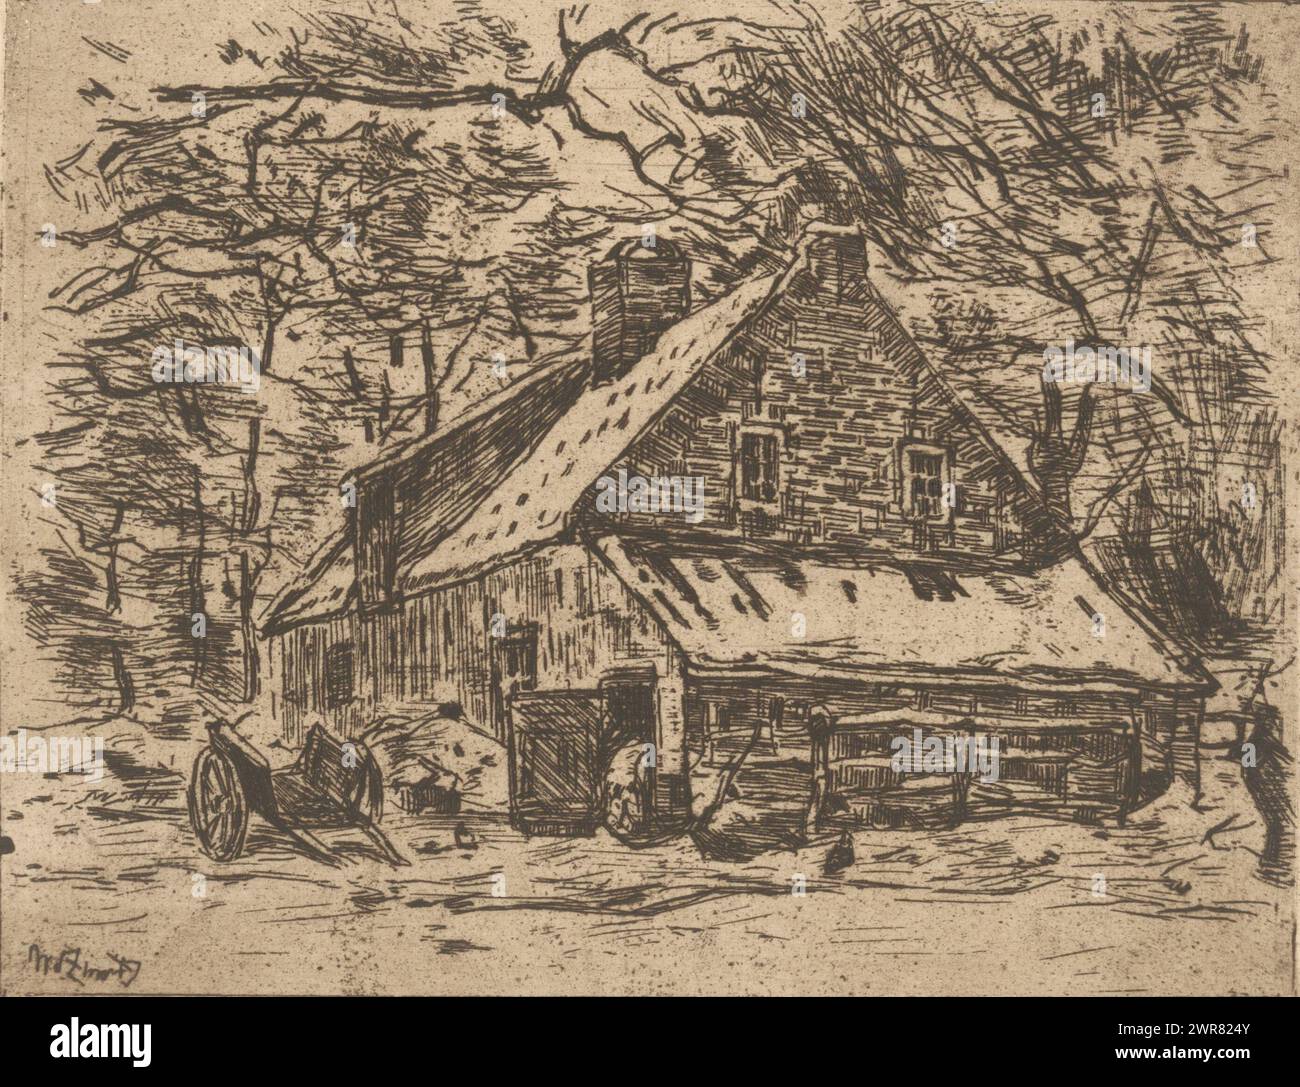 House in the woods, Farm (Lage Vuursche) (original title), print maker: Willem de Zwart, (signed by artist), c. 1895 - c. 1896, paper, etching, height 130 mm × width 161 mm, print Stock Photo